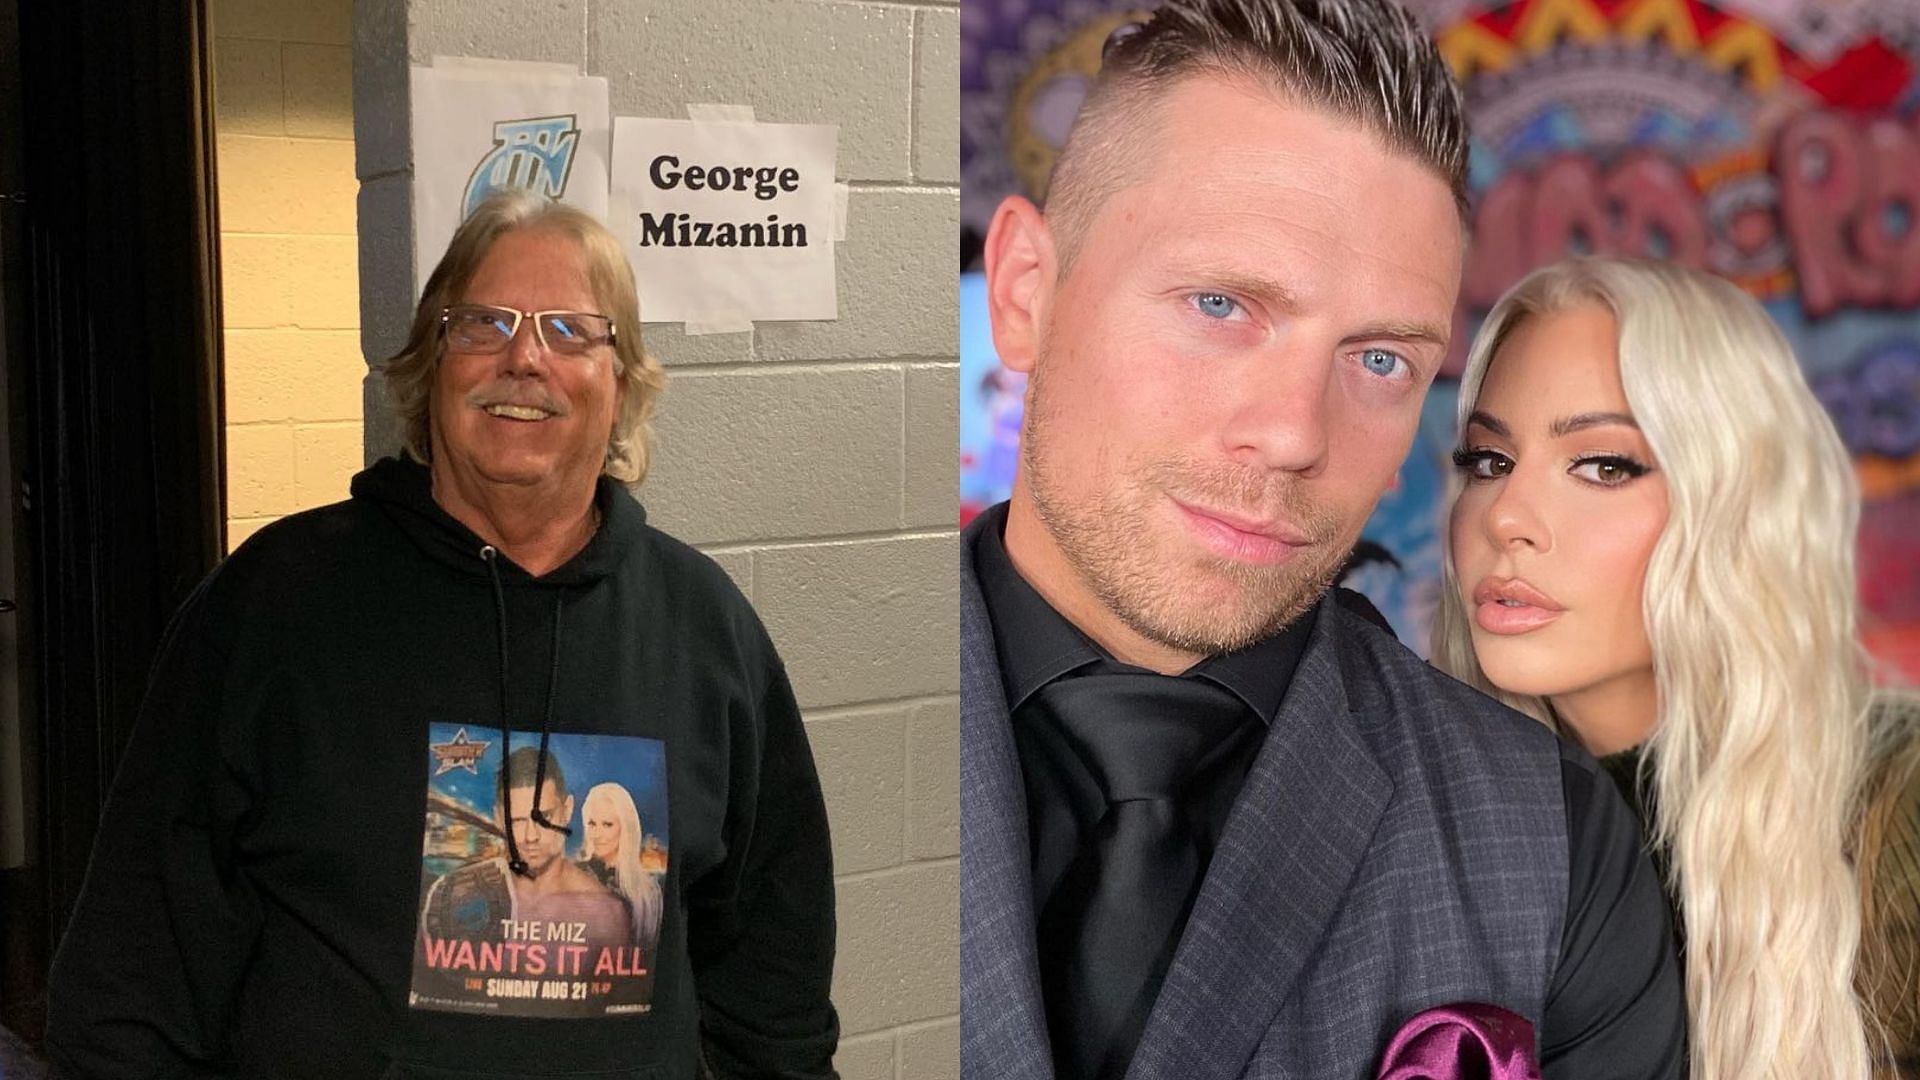 George Mizanin [Left], and WWE couple Mike Mizanin and Maryse [Right] (Image via Mike &quot;The Miz&quot; Mizanin/ Facebook)